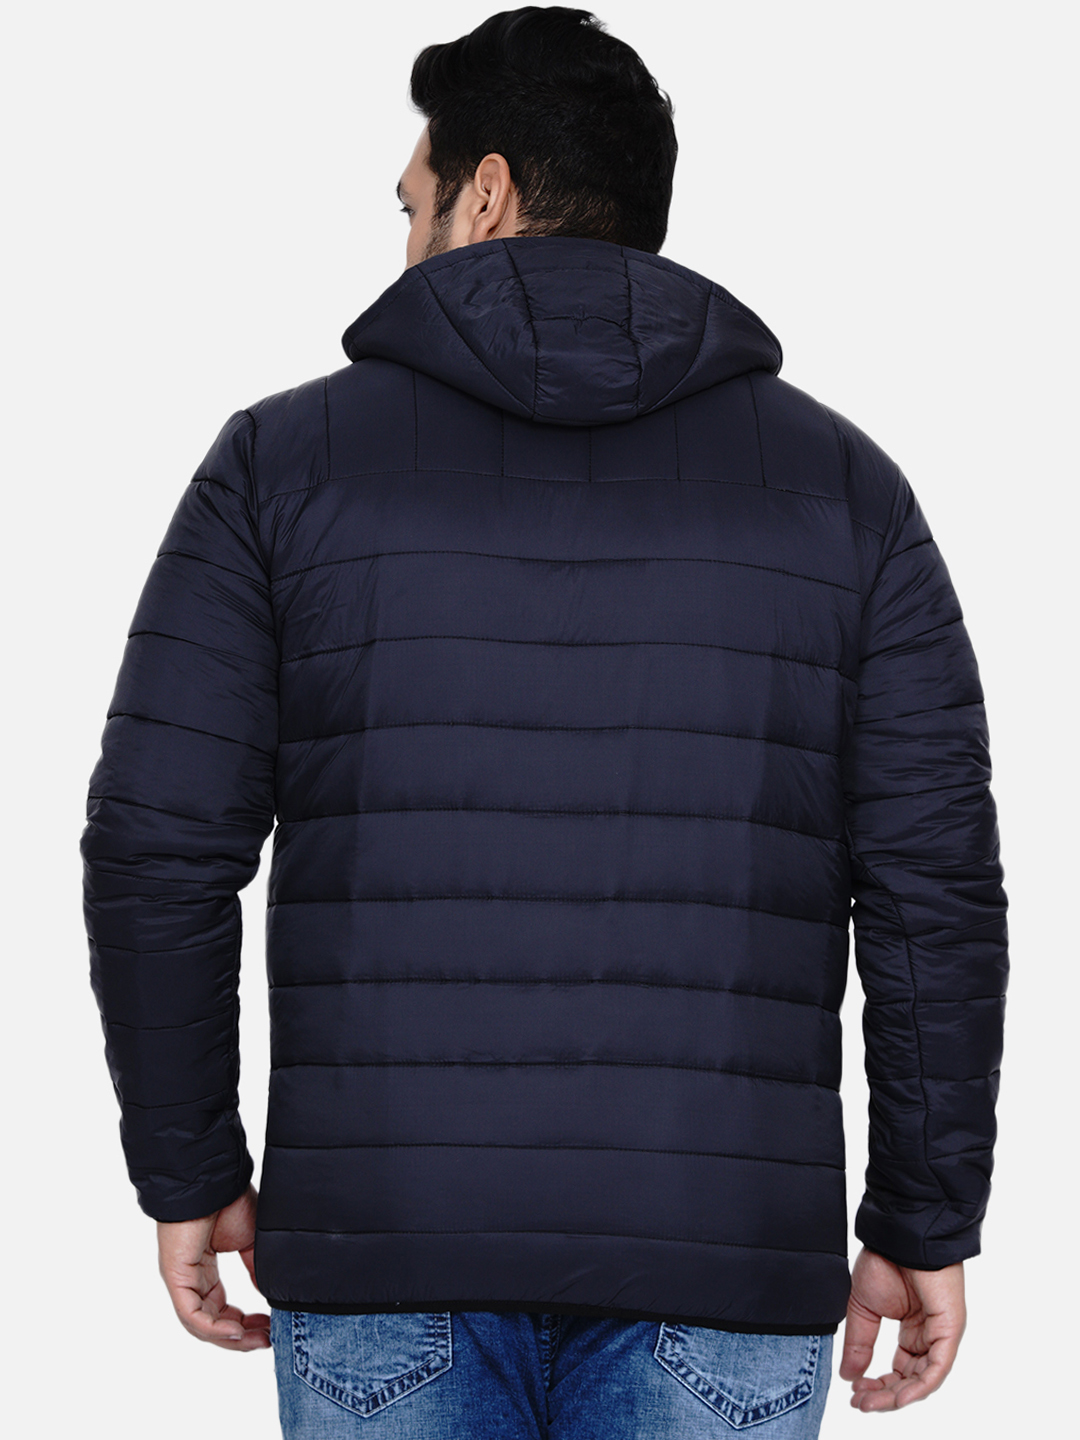 winterwear/jackets/JPJKT73003/jpjkt73003-5.jpg